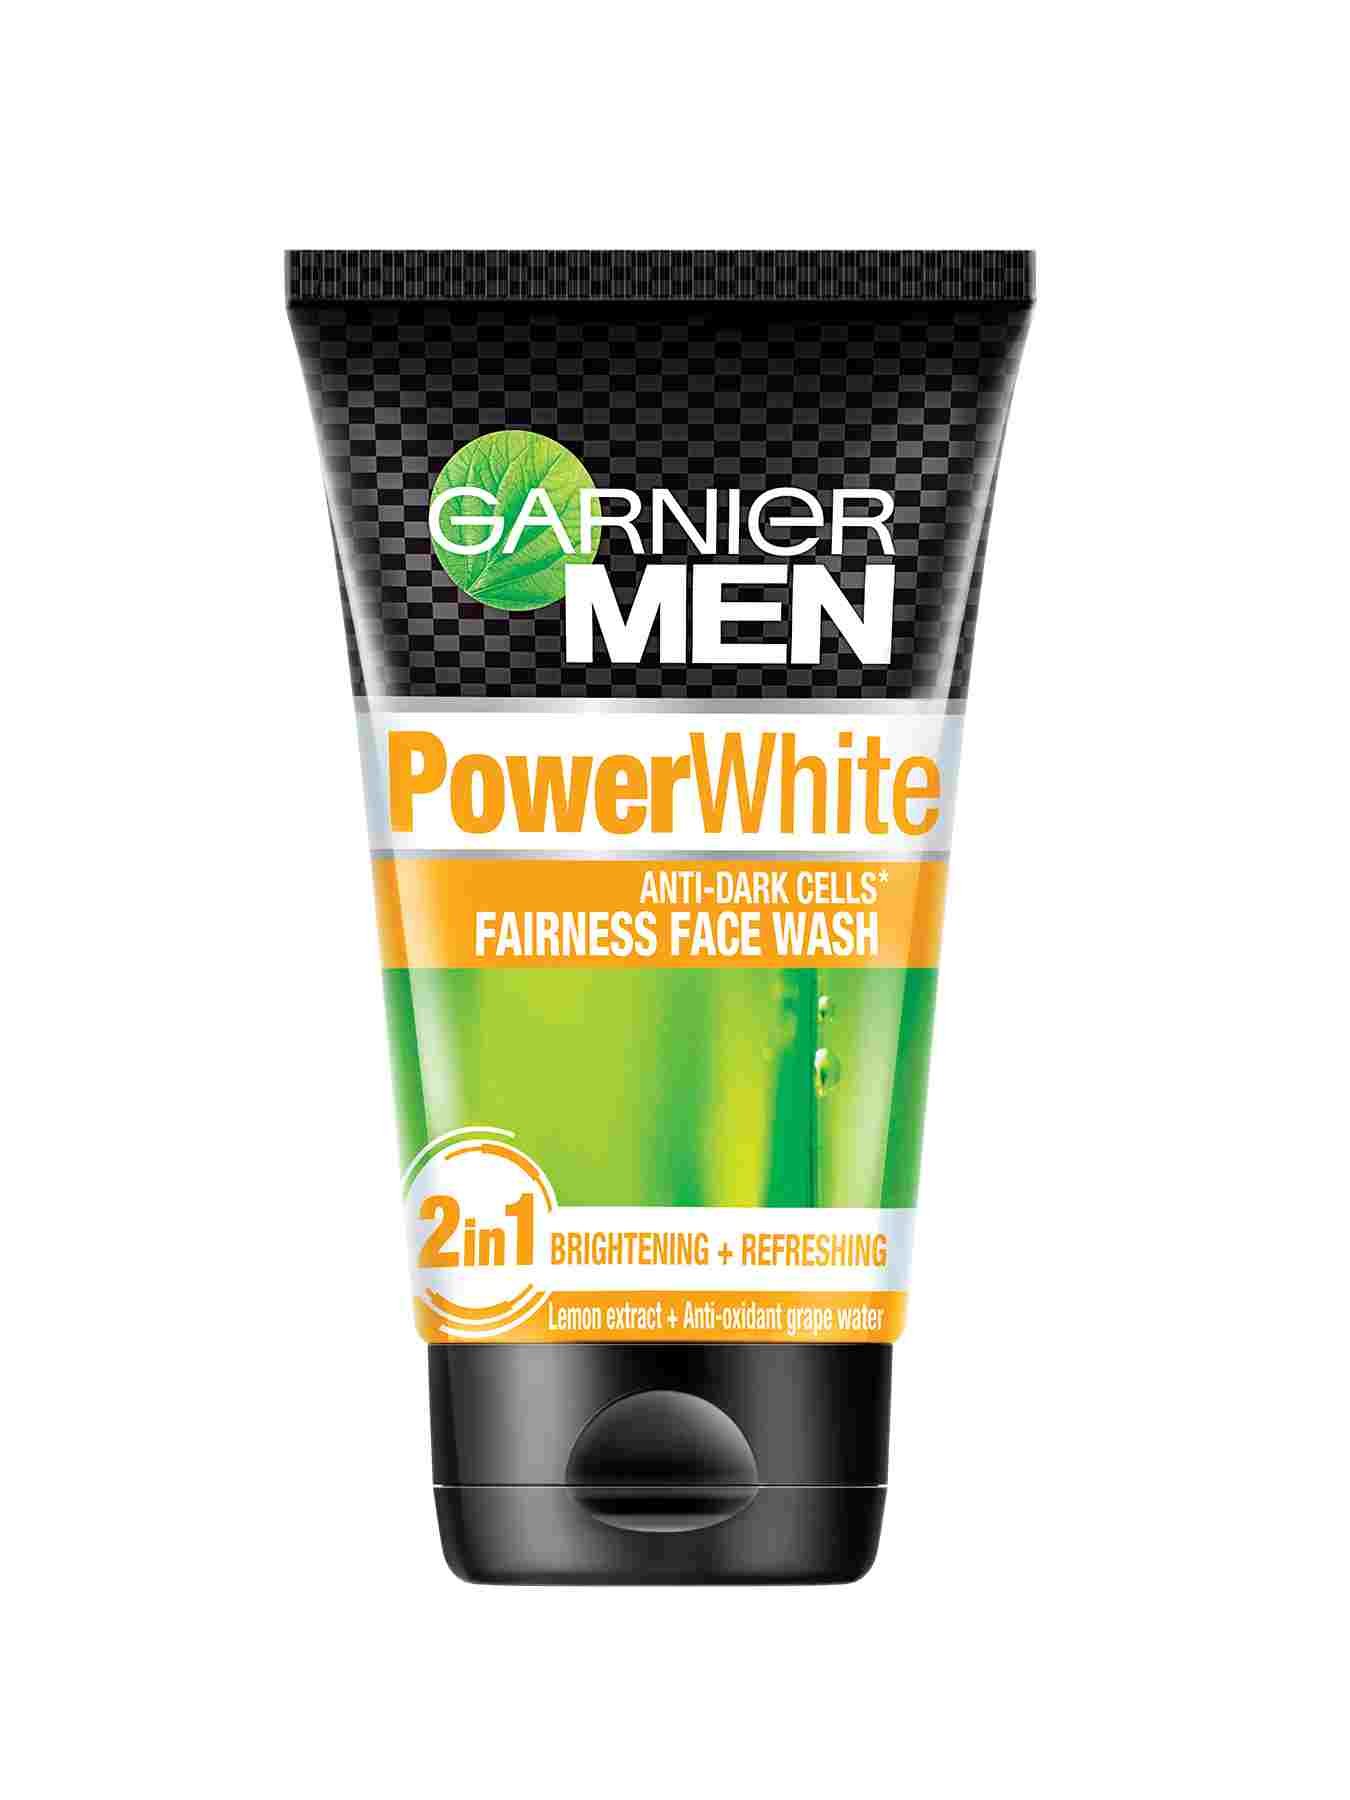 Garnier Men Power White Fairness Face Wash